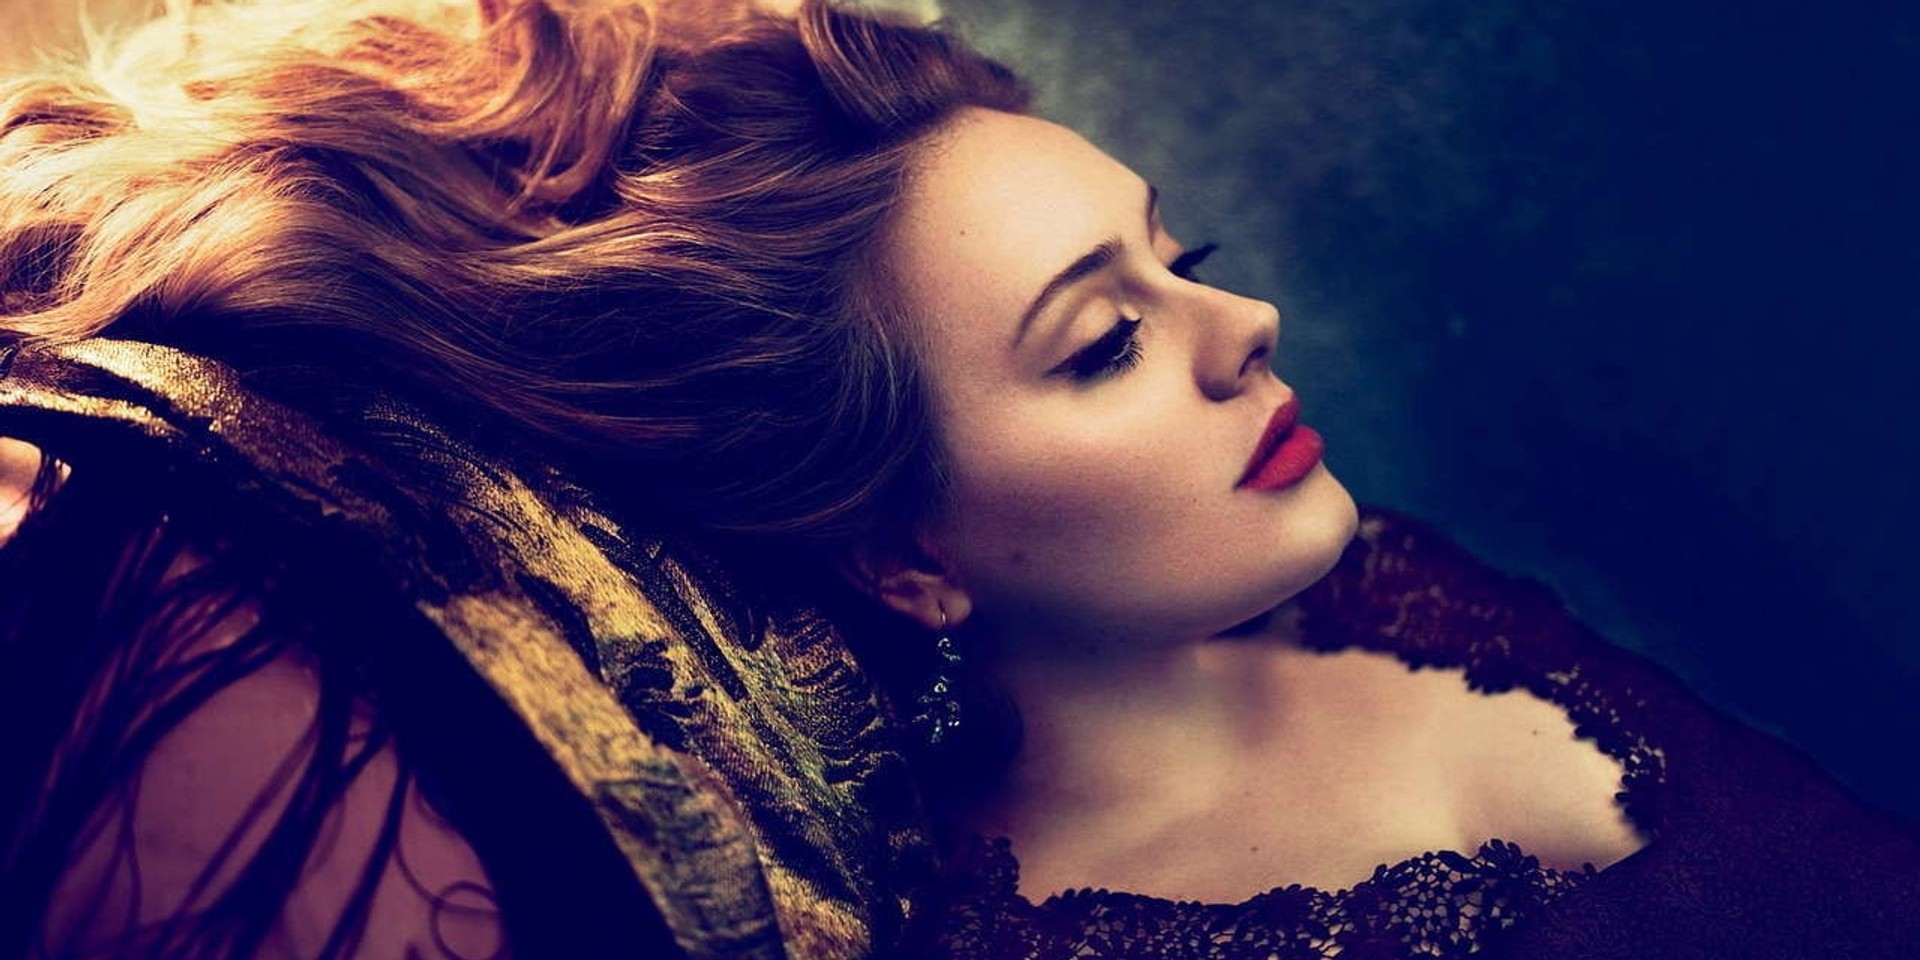 British media reports Adele has begun working on a new album